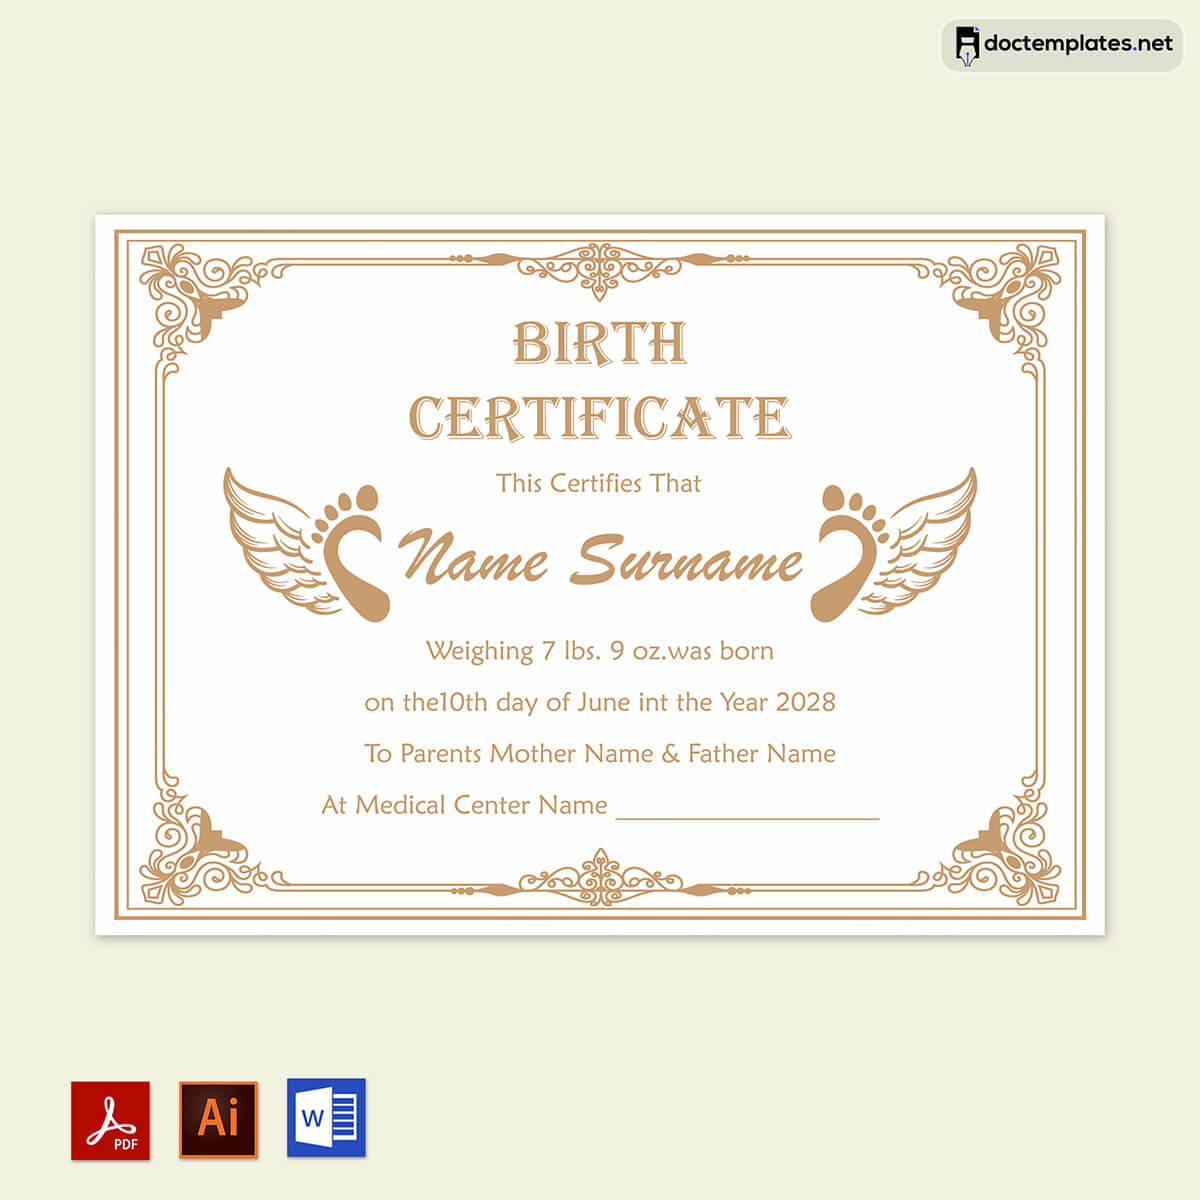 Image of Blank birth certificate PDF
Blank birth certificate PDF
